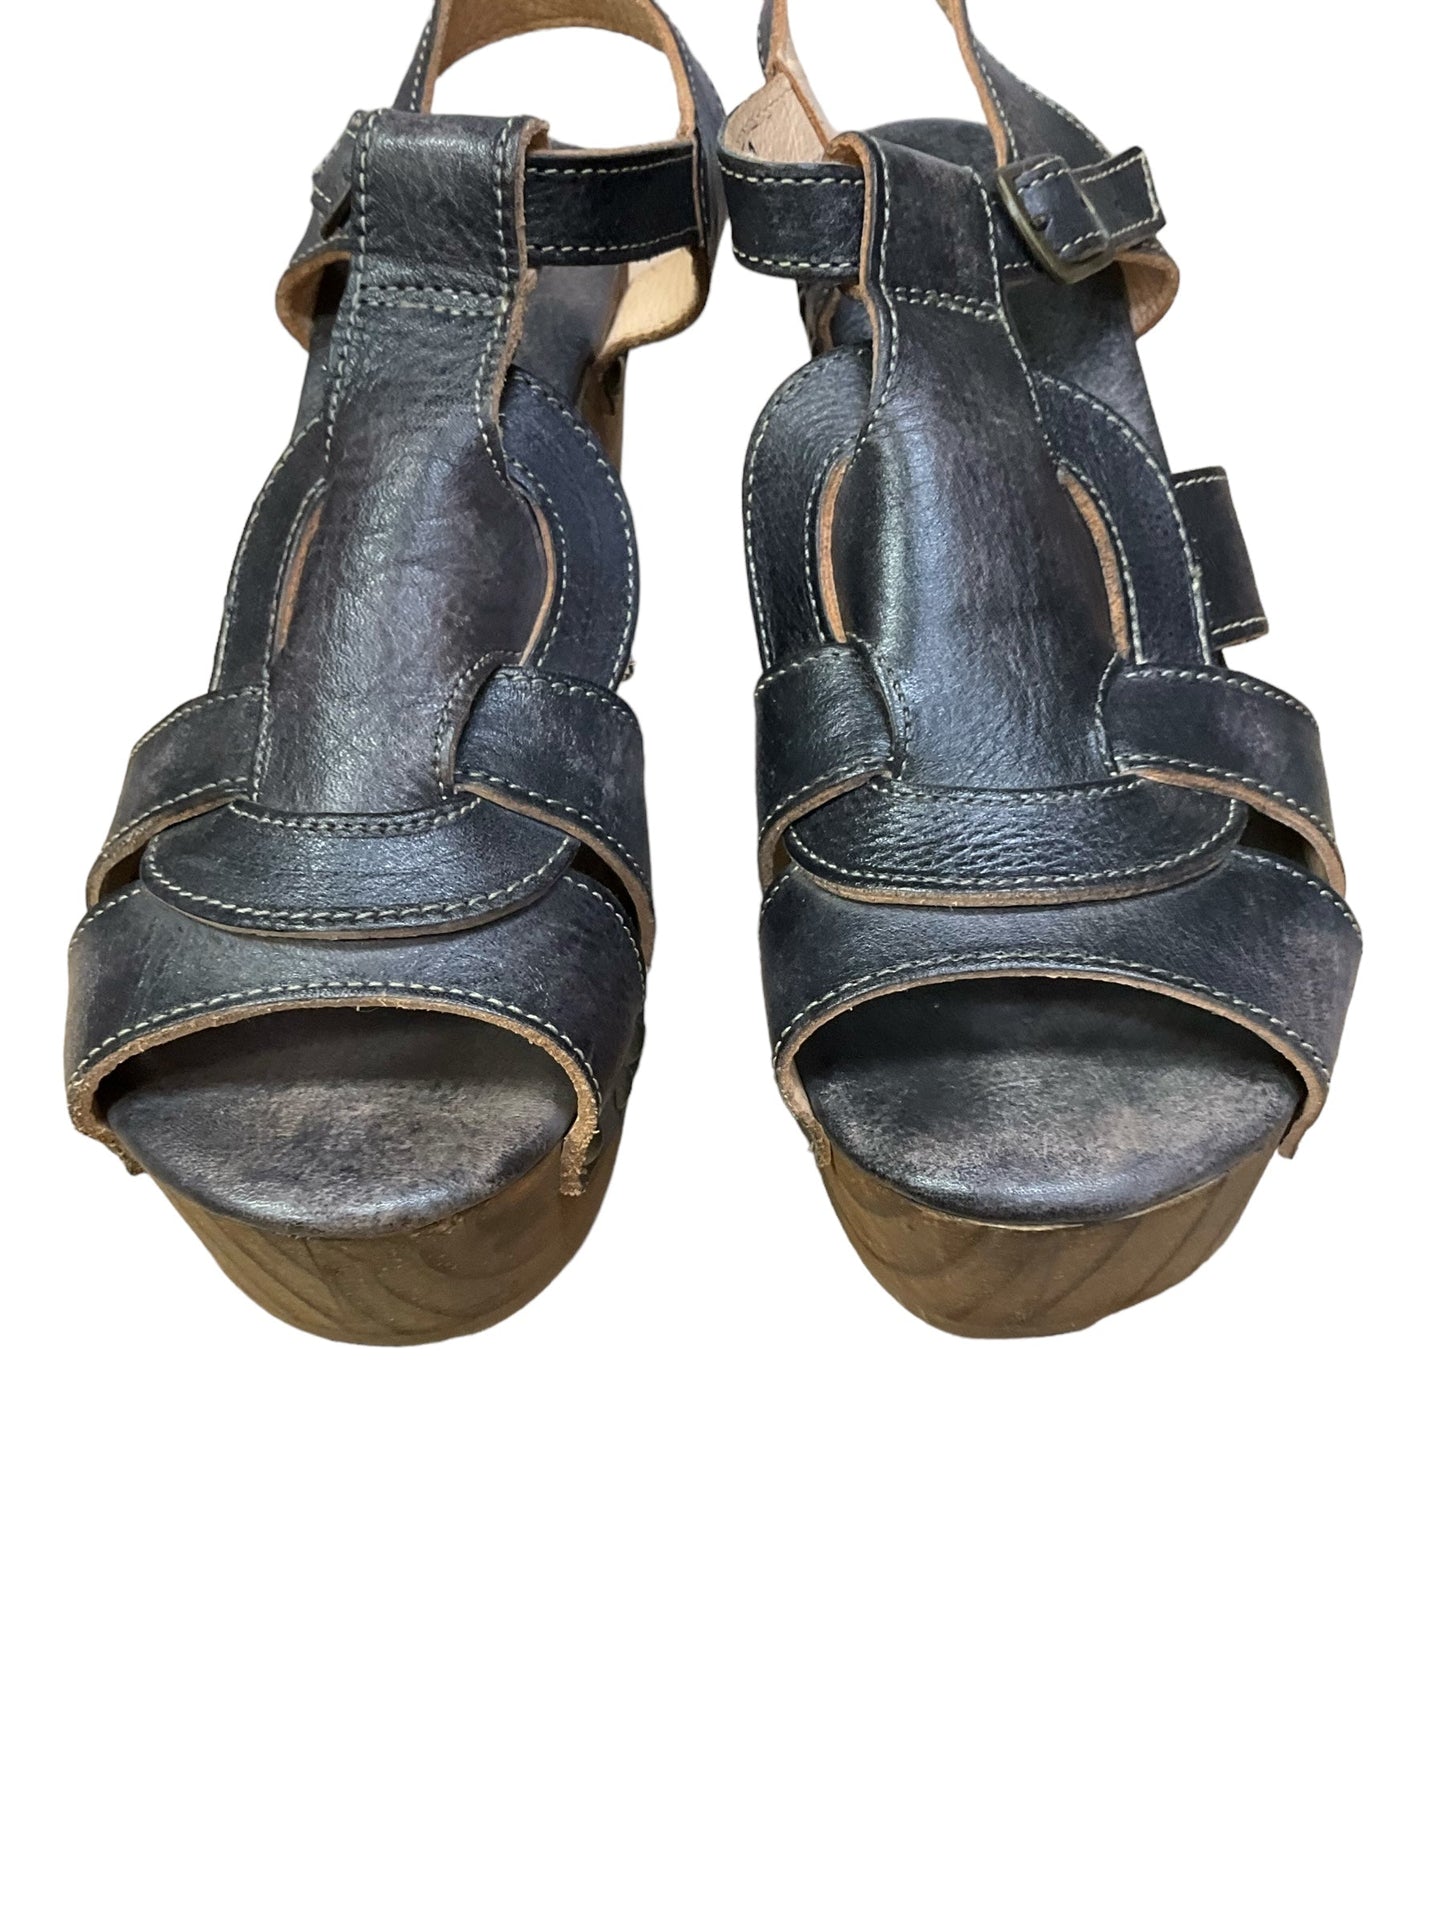 Grey Shoes Heels Wedge Bed Stu, Size 8